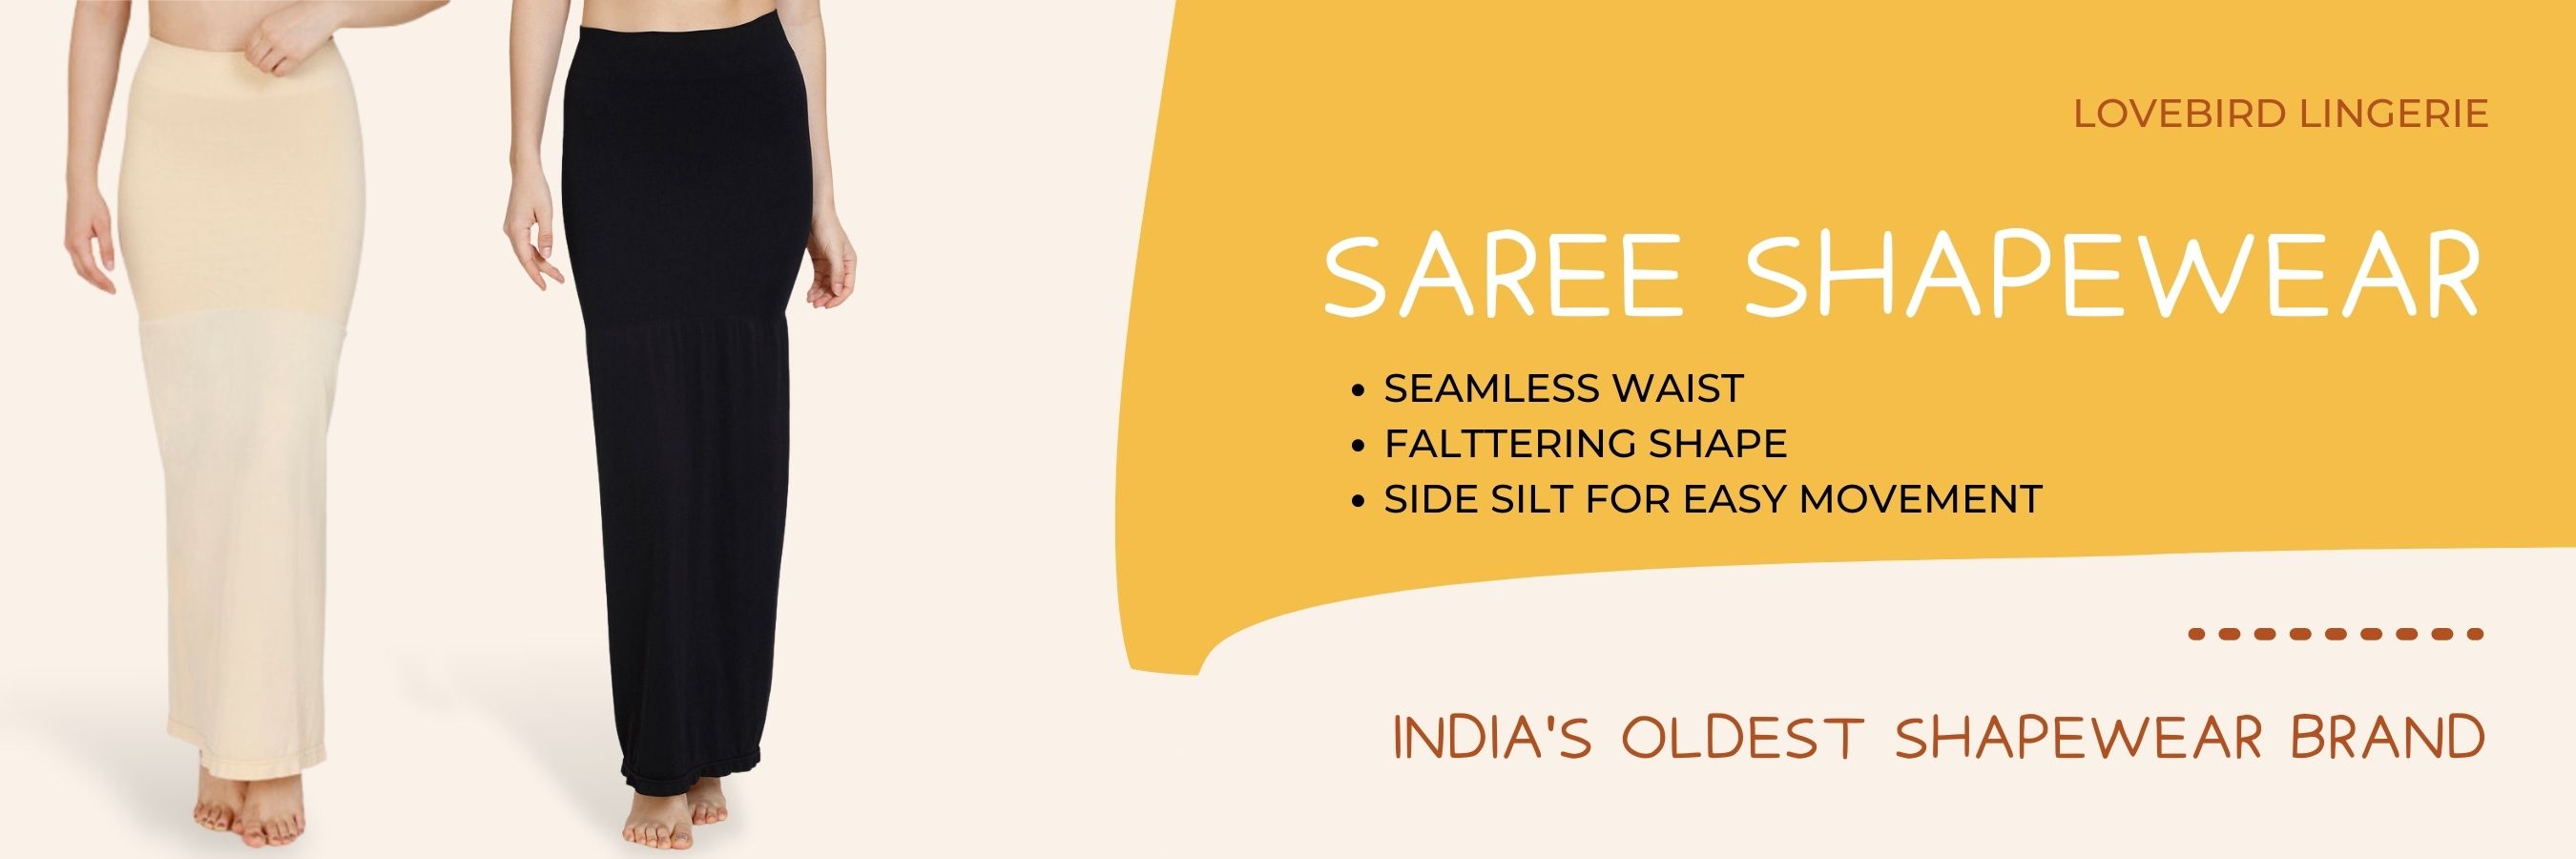 Saree Shapewear - Shop the bes banner lovebird